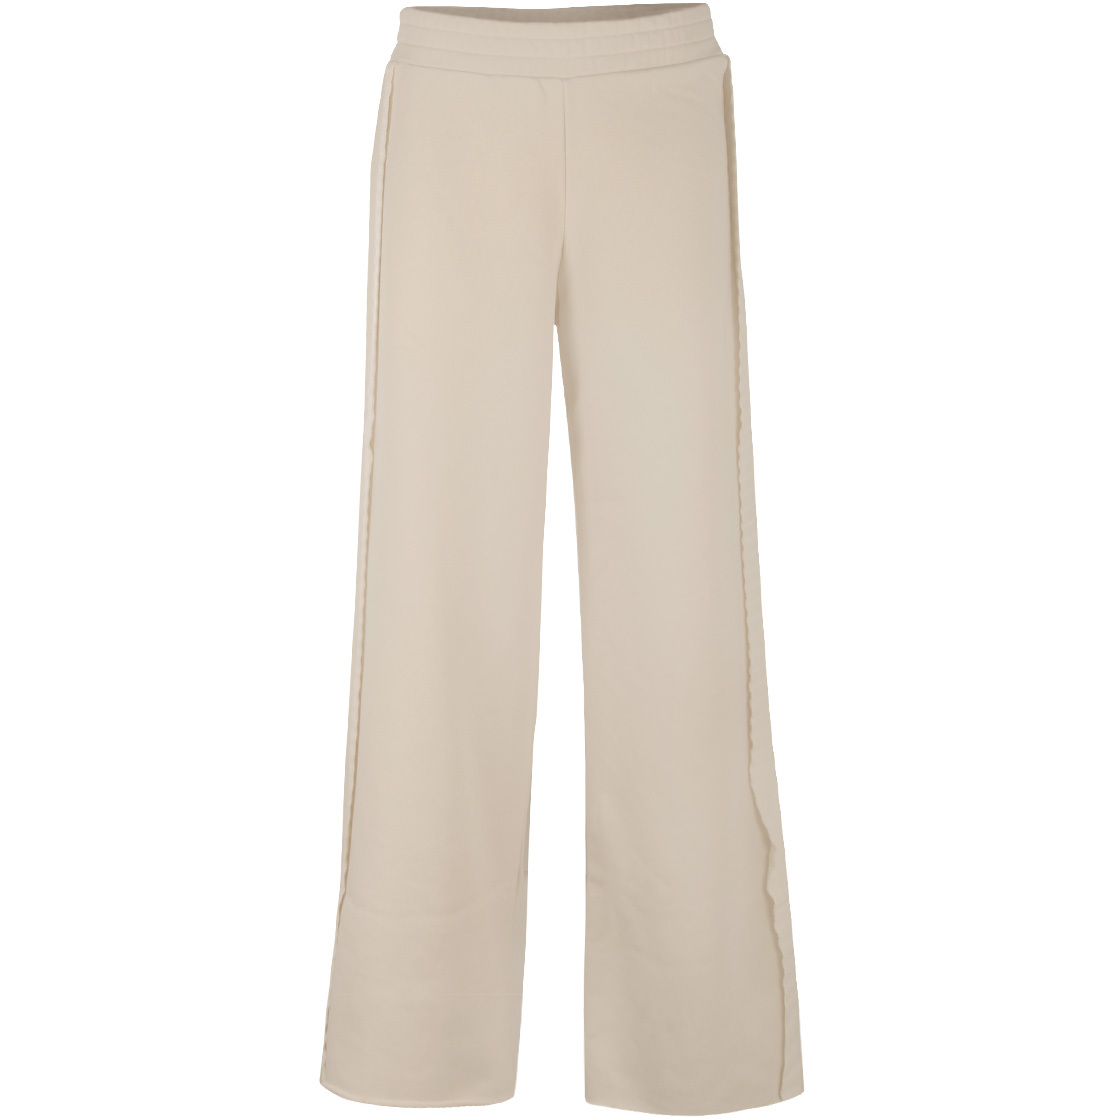 Crop top style cream silk palazzo suit - G3-WSS40743 | G3fashion.com